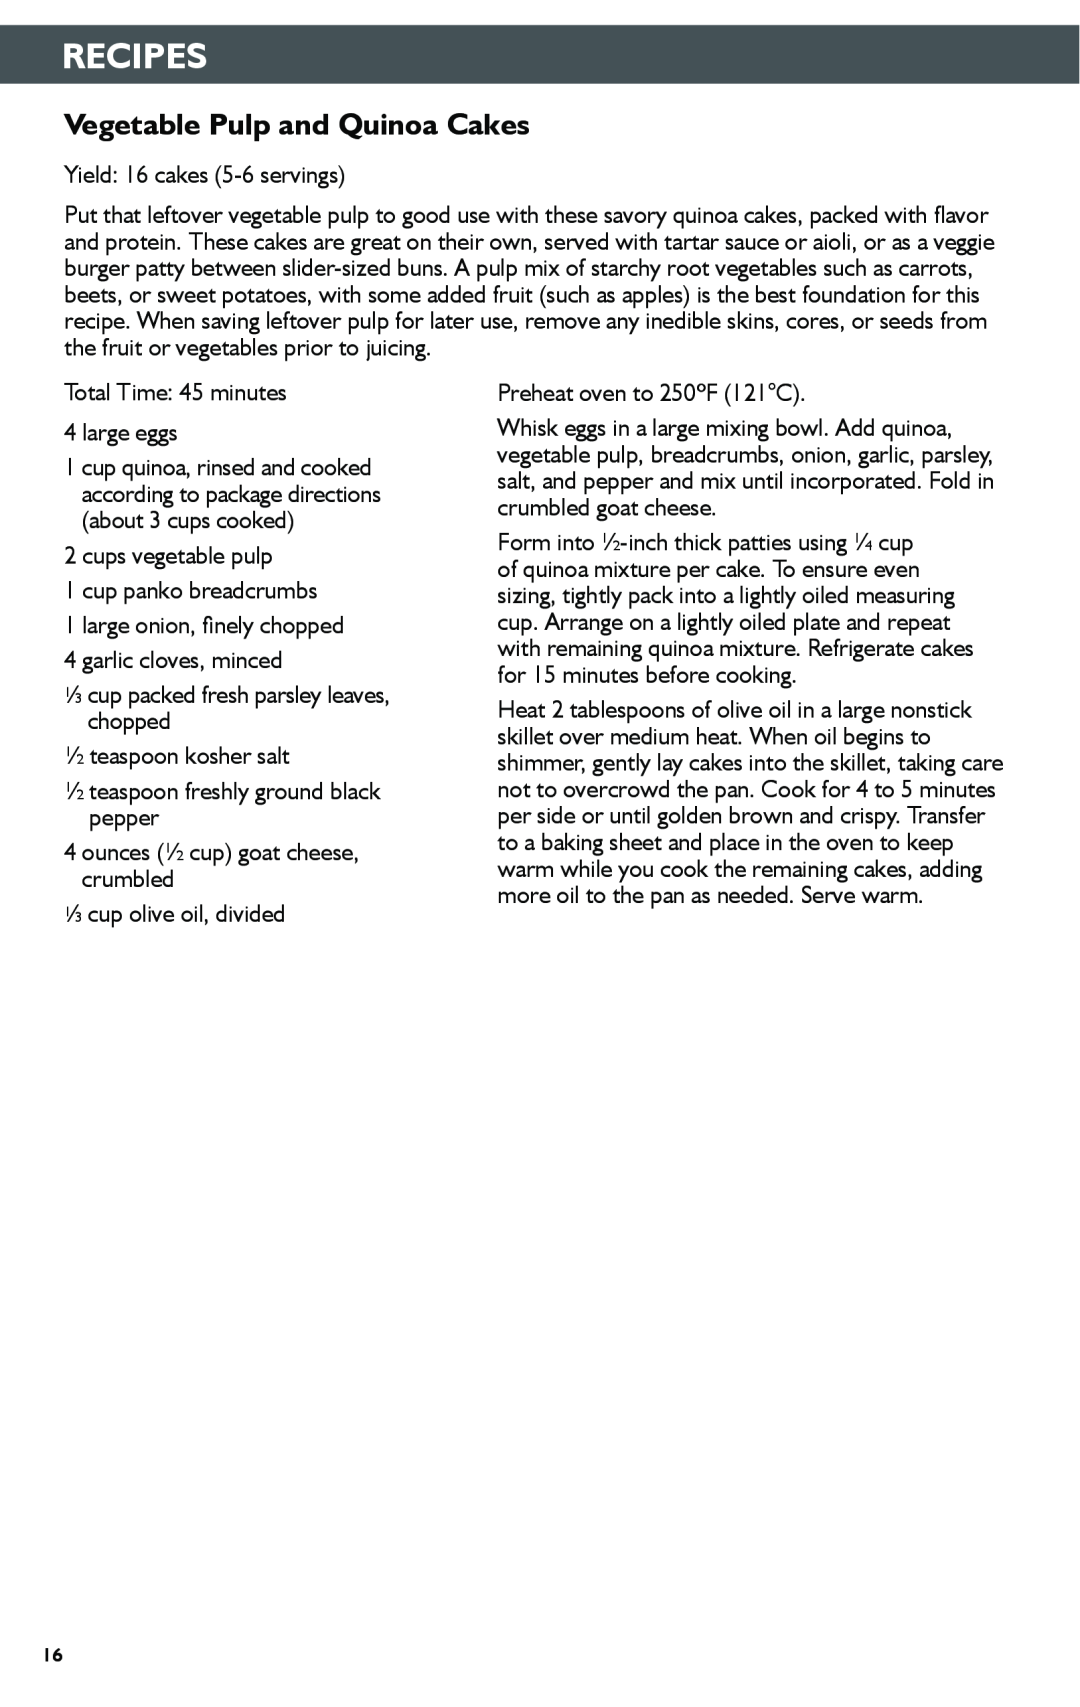 KitchenAid KSN1JA manual Vegetable Pulp and Quinoa Cakes, Recipes, Yield 16 cakes 5-6 servings, Preheat oven to 250ºF 121C 